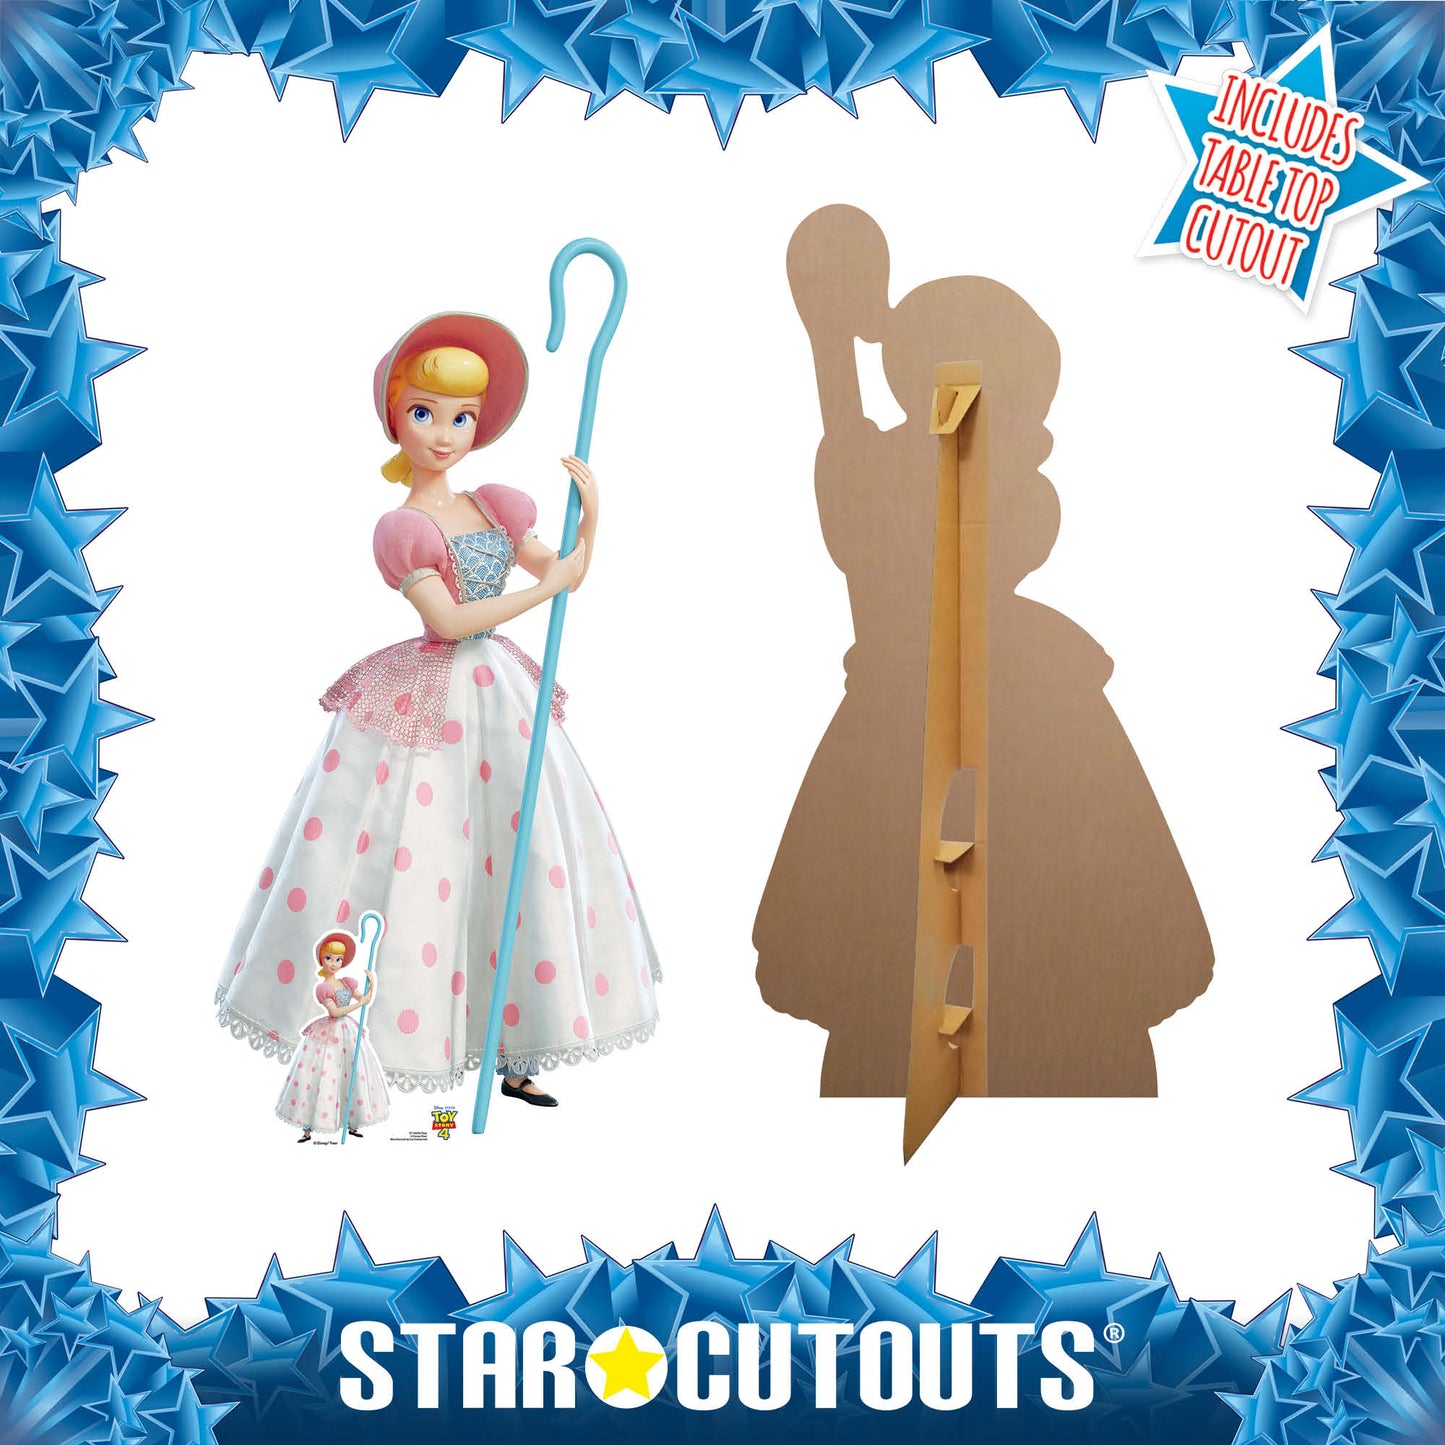 Bo Peep Classic Pink and White Polka Dot Dress Toy Story 4 Cardboard Cutout